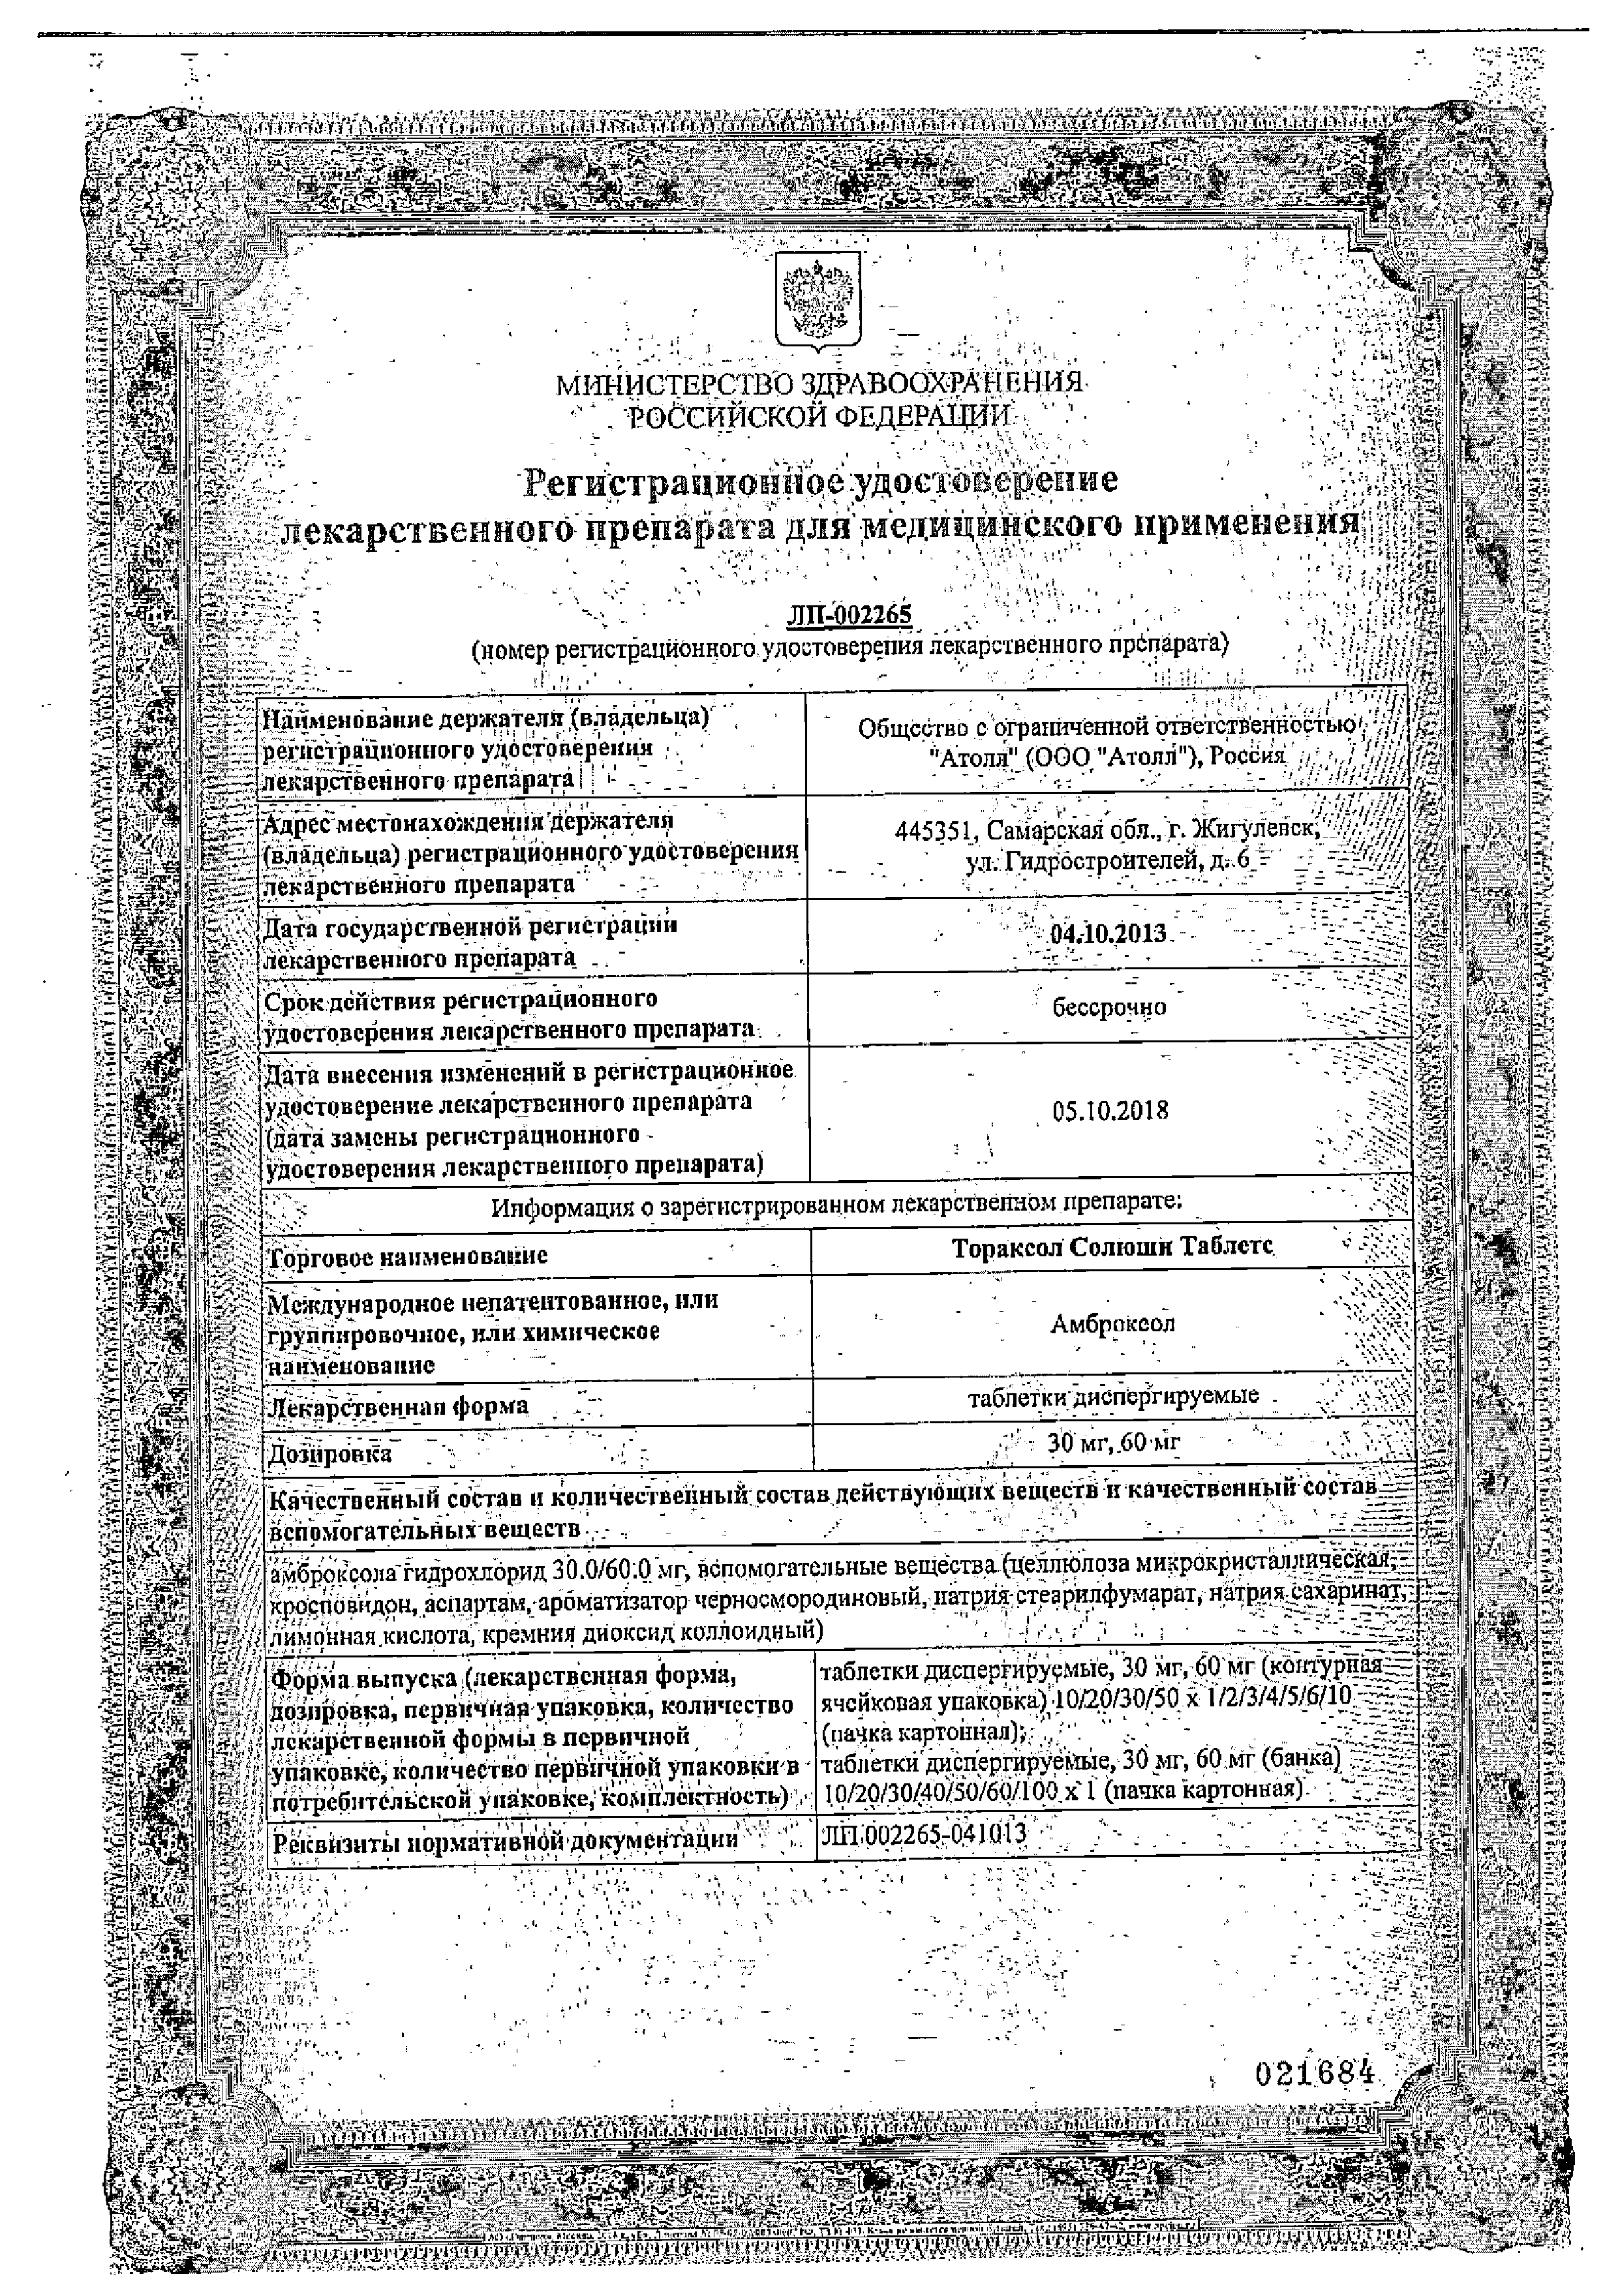 Тораксол Солюшн Таблетс сертификат